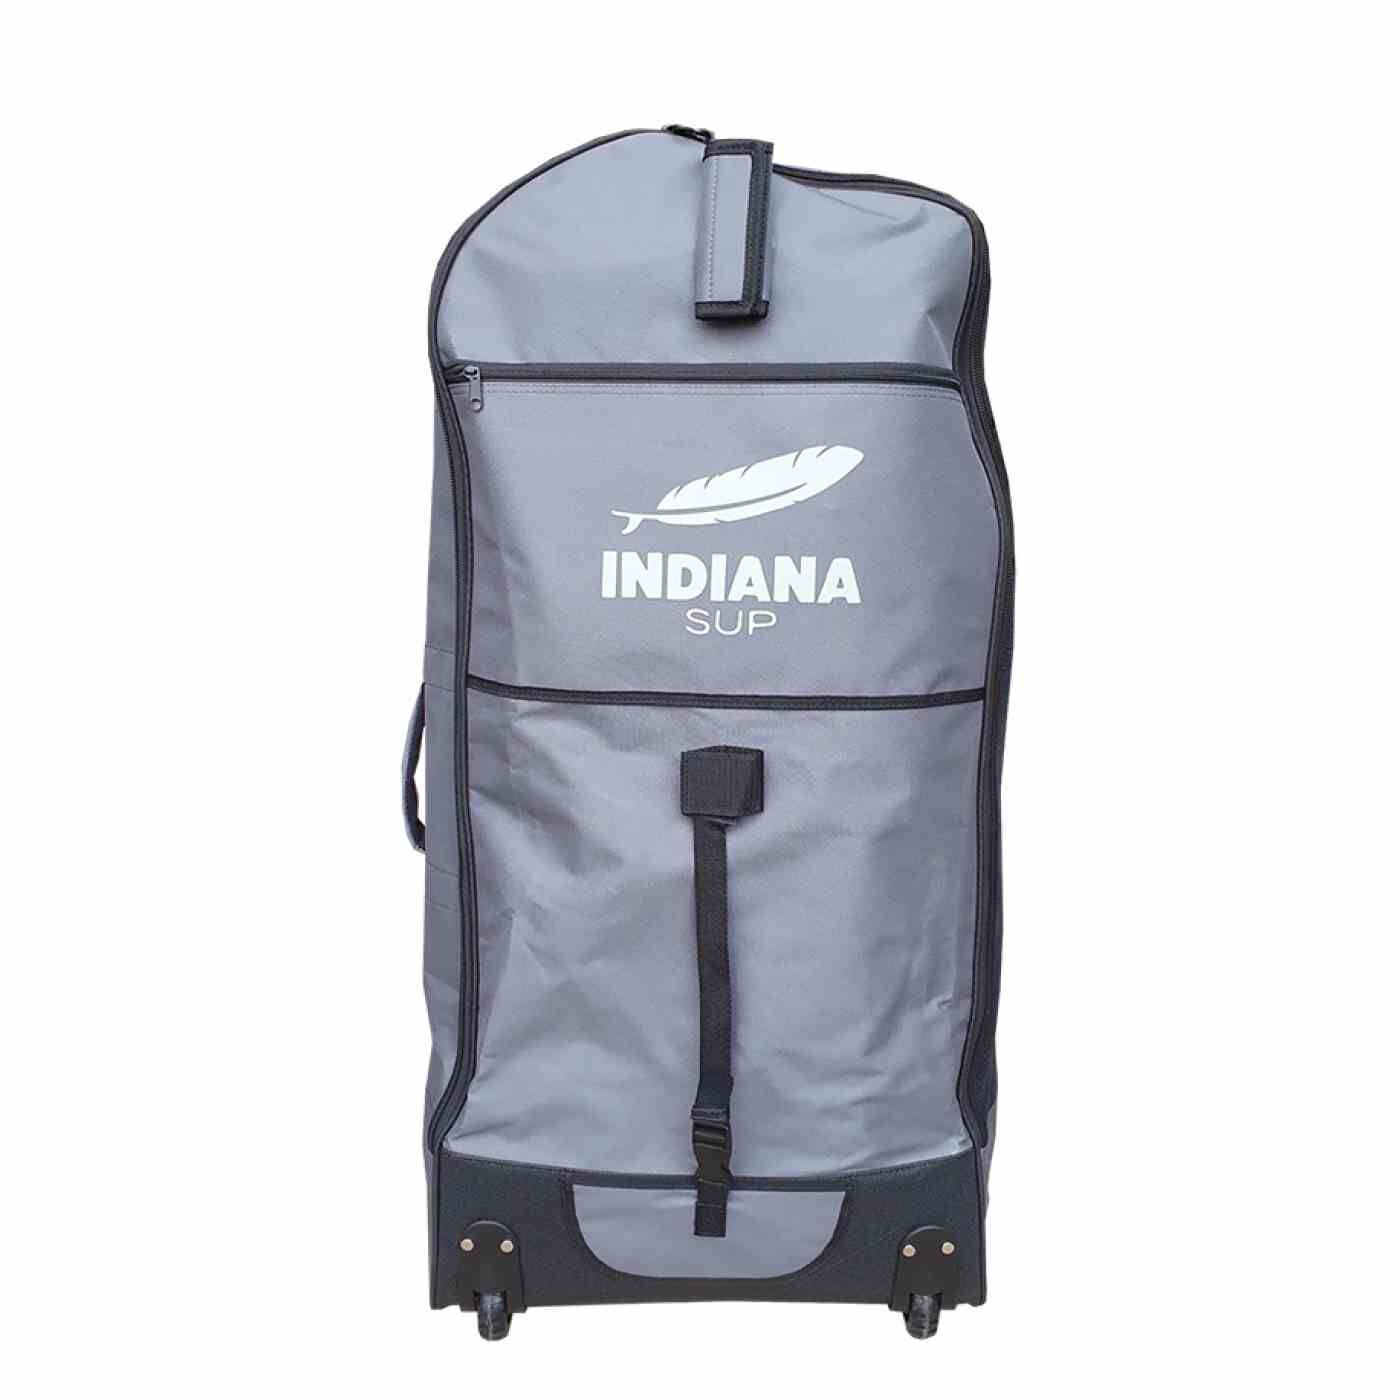 Надувная доска для SUP-бординга Indiana 11'6 Touring Pack Premium 3